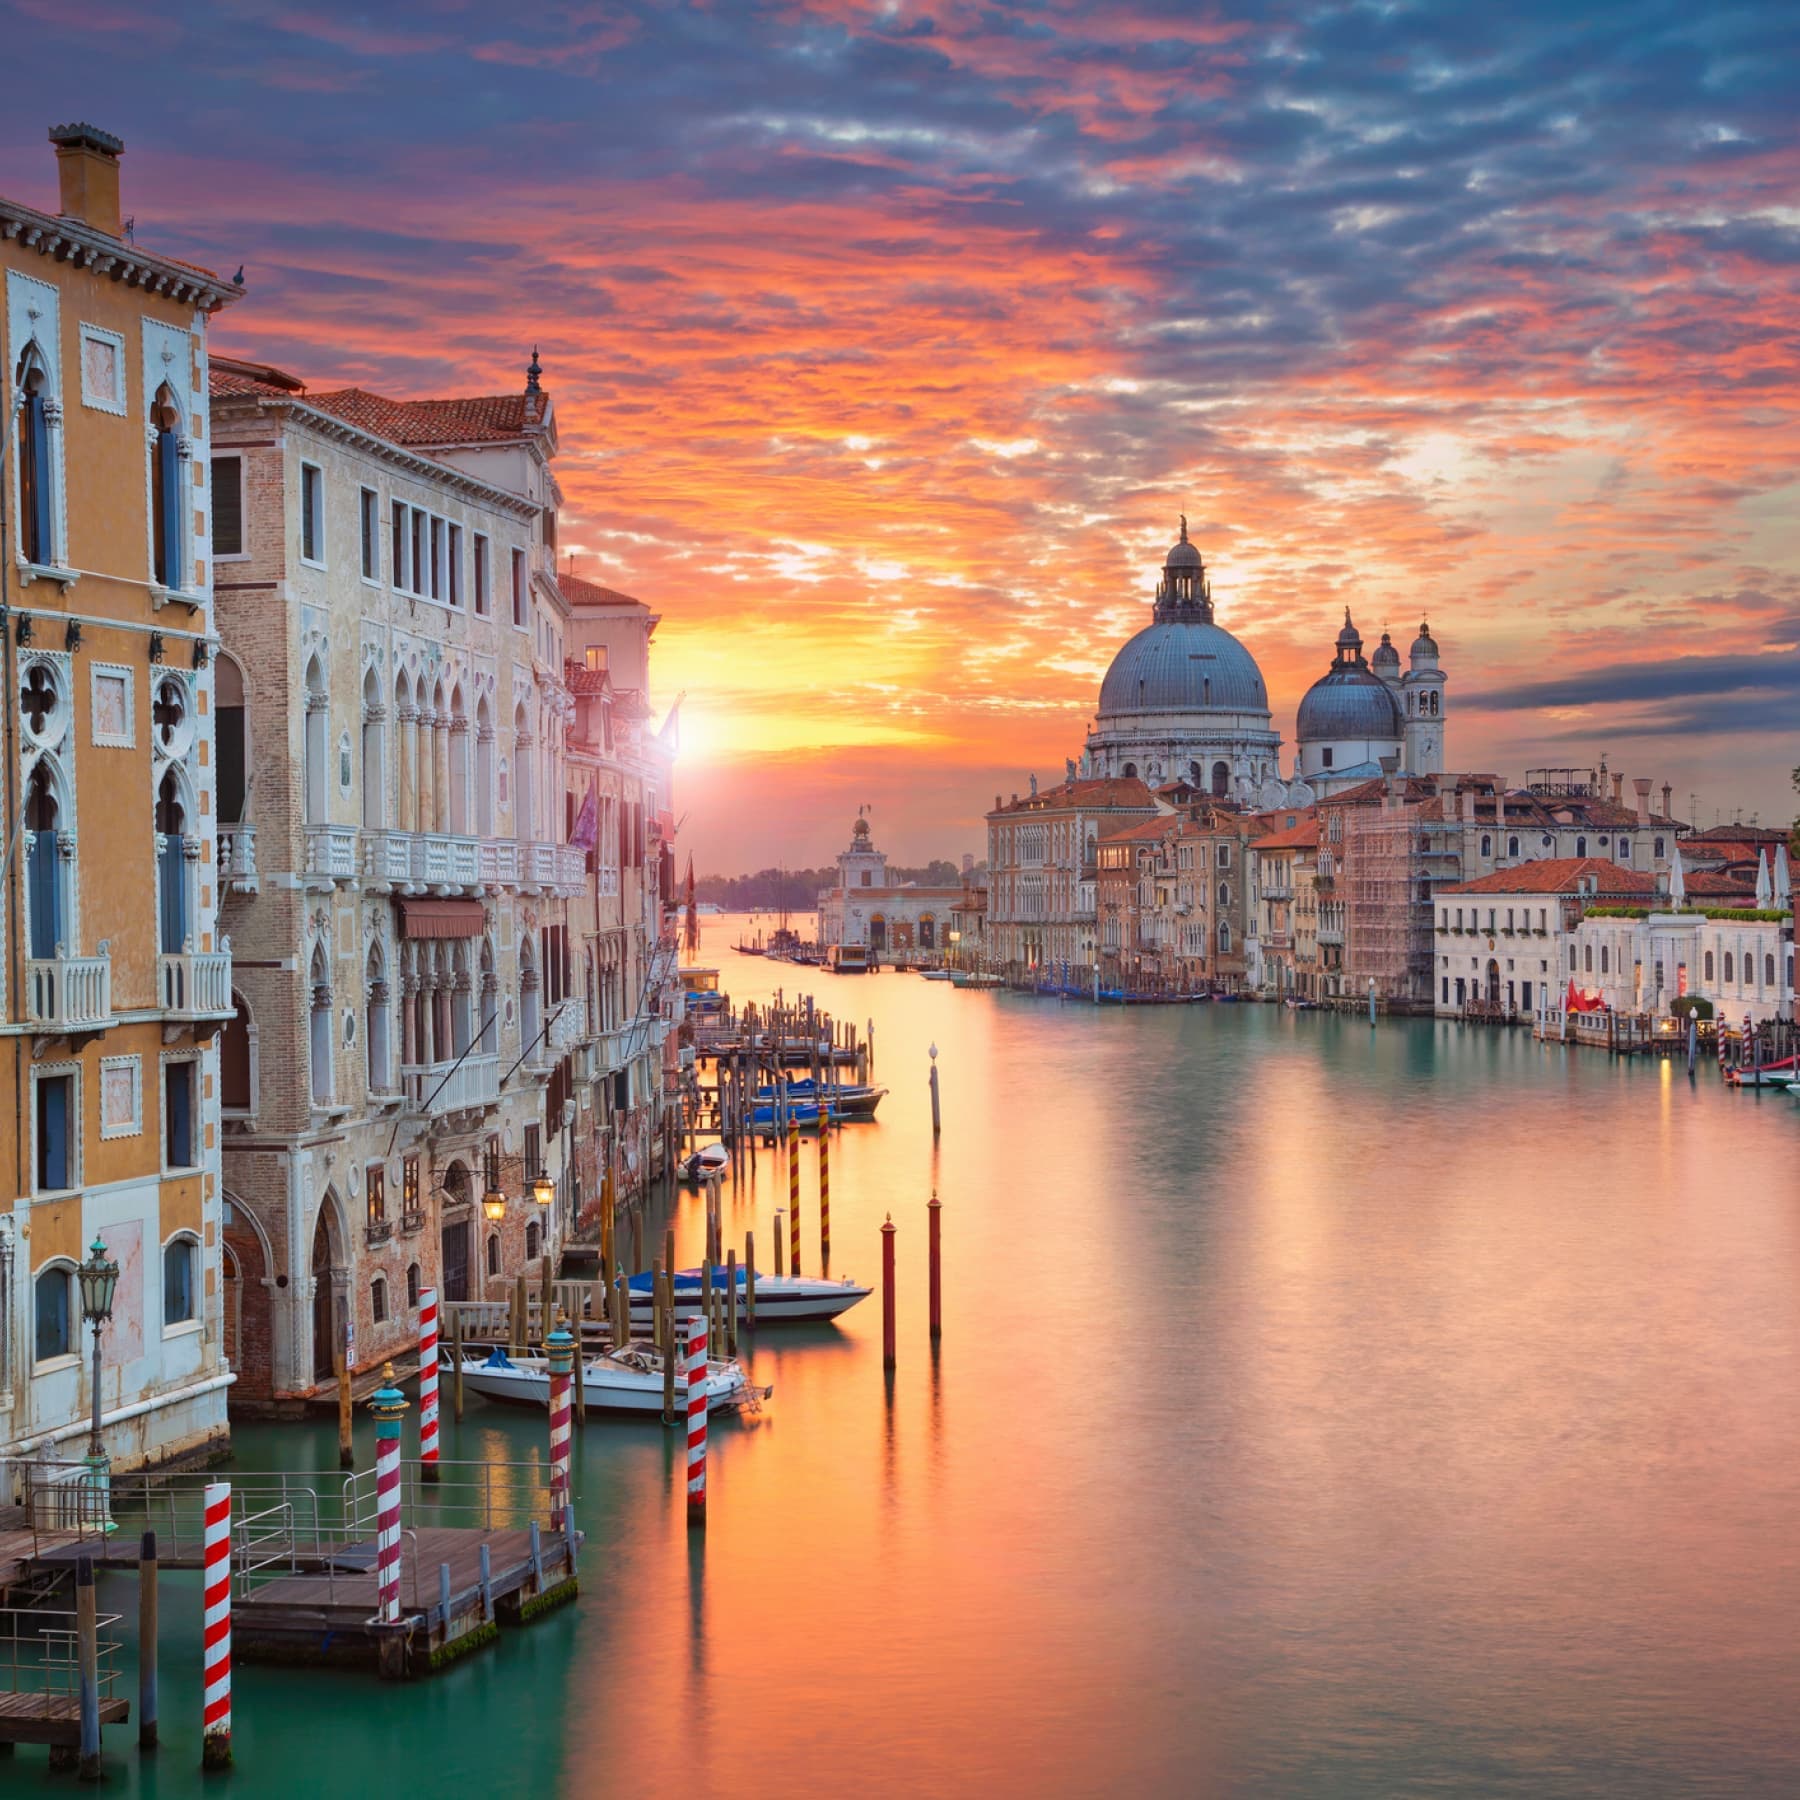 Enjoy a romantic city breaks in Venice with a gondola ride